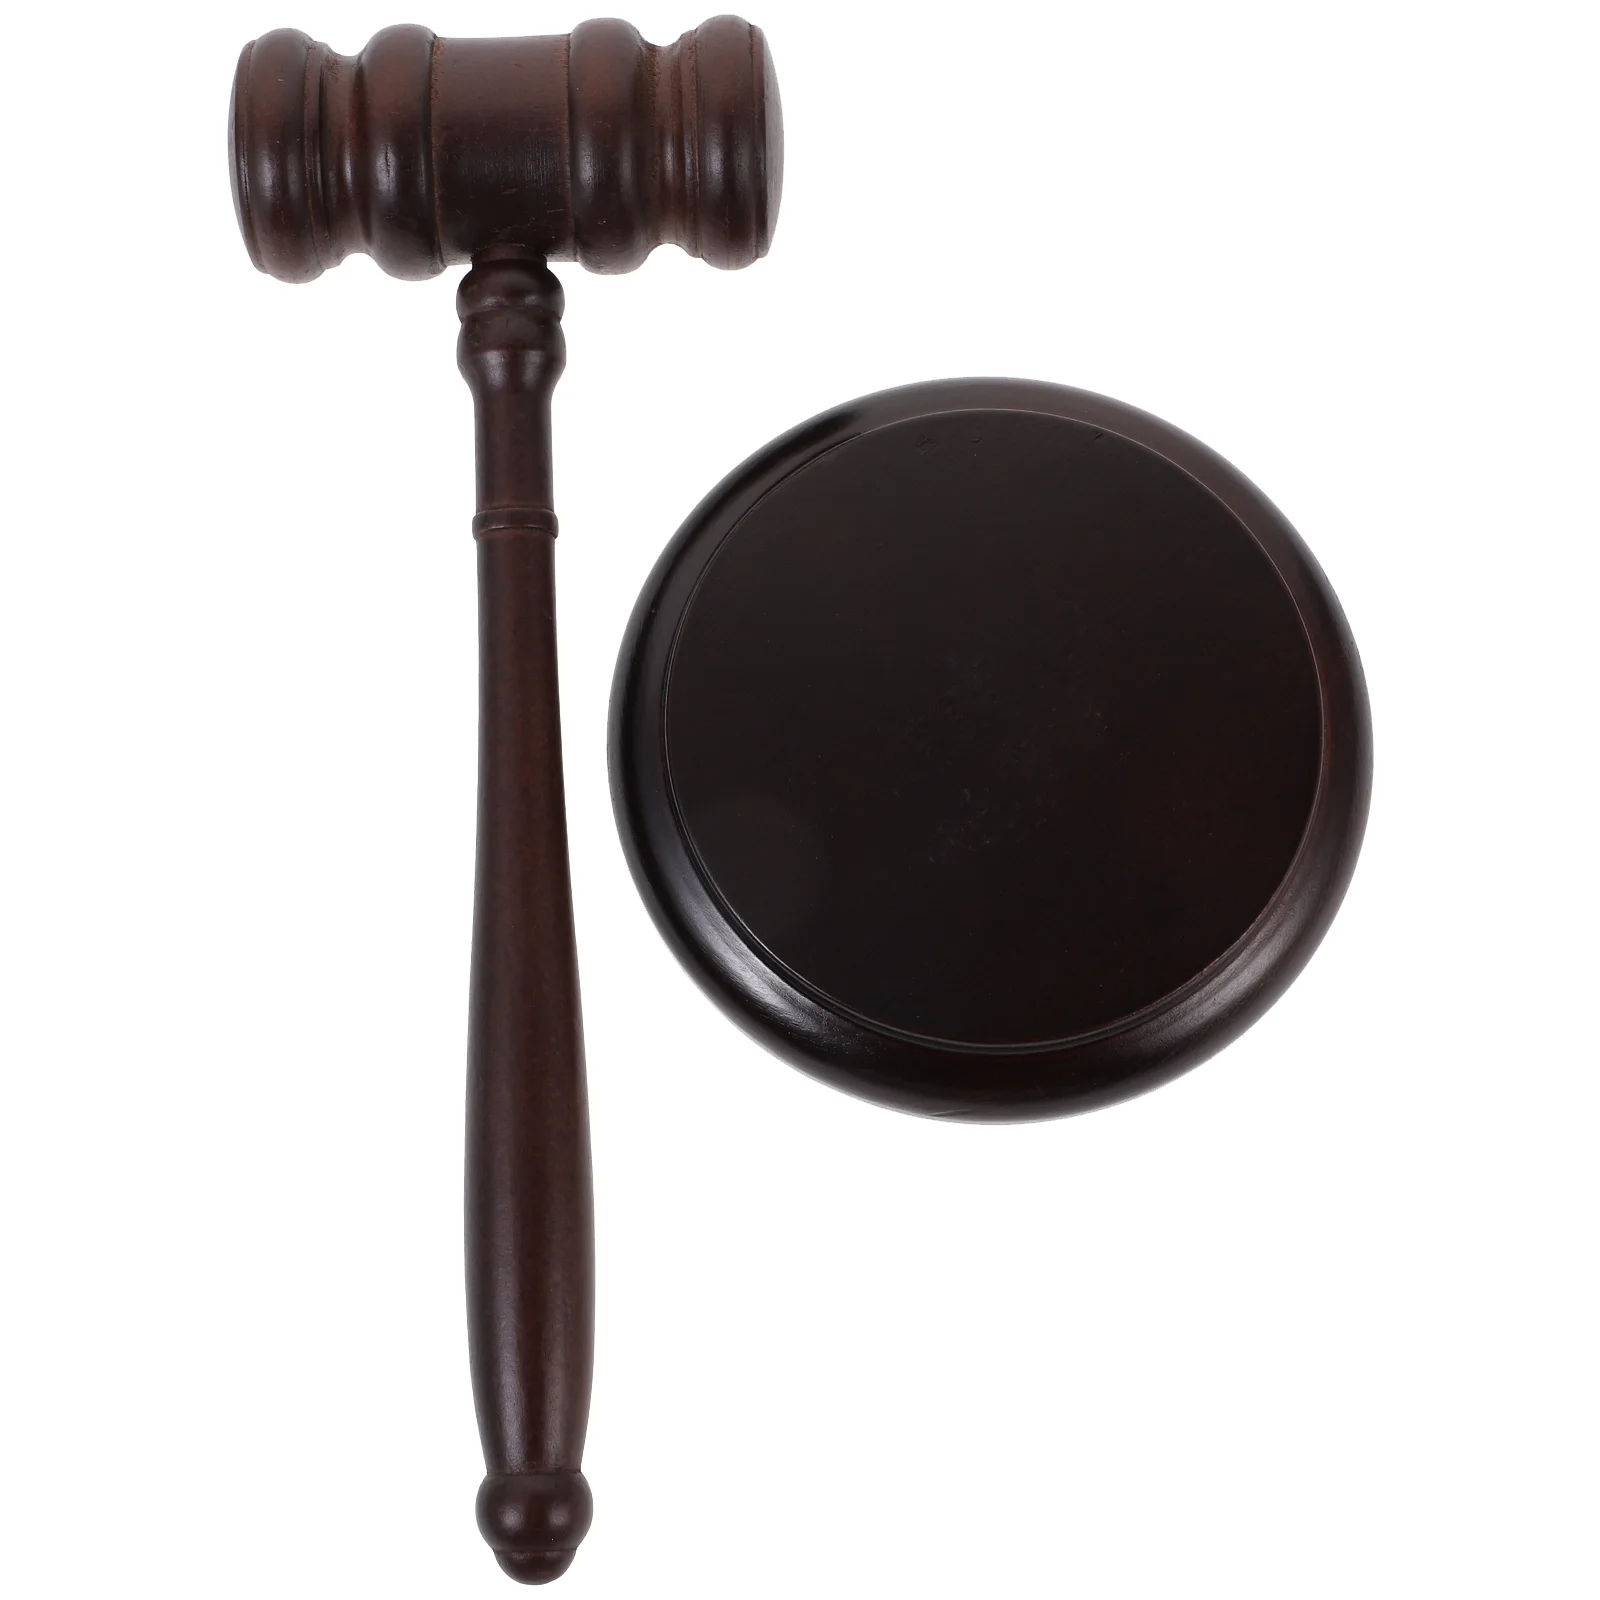 

Auction Hammer Tools Kids Court Gavel Judge Props Mallet Order Wooden Mallets Official Gavels Child Courtroom